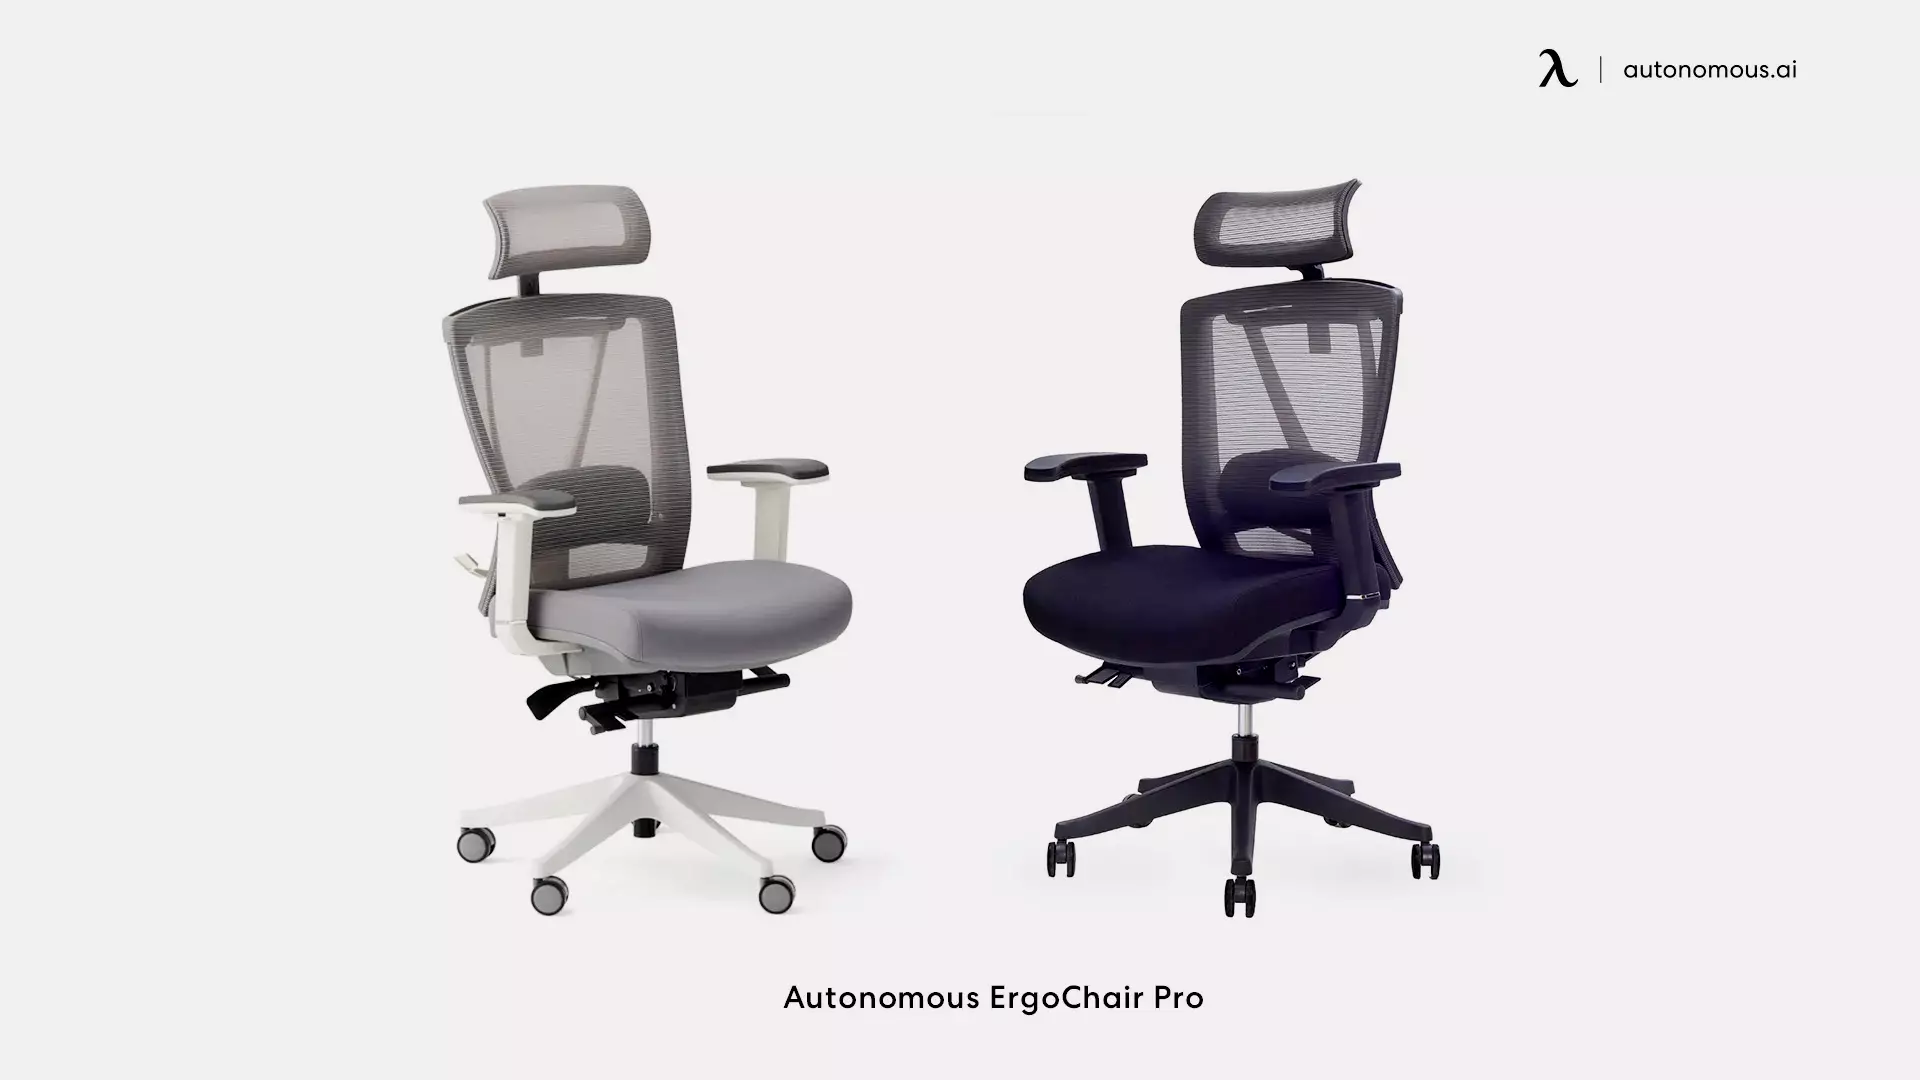 Autonomous ErgoChair Pro swivel office chair